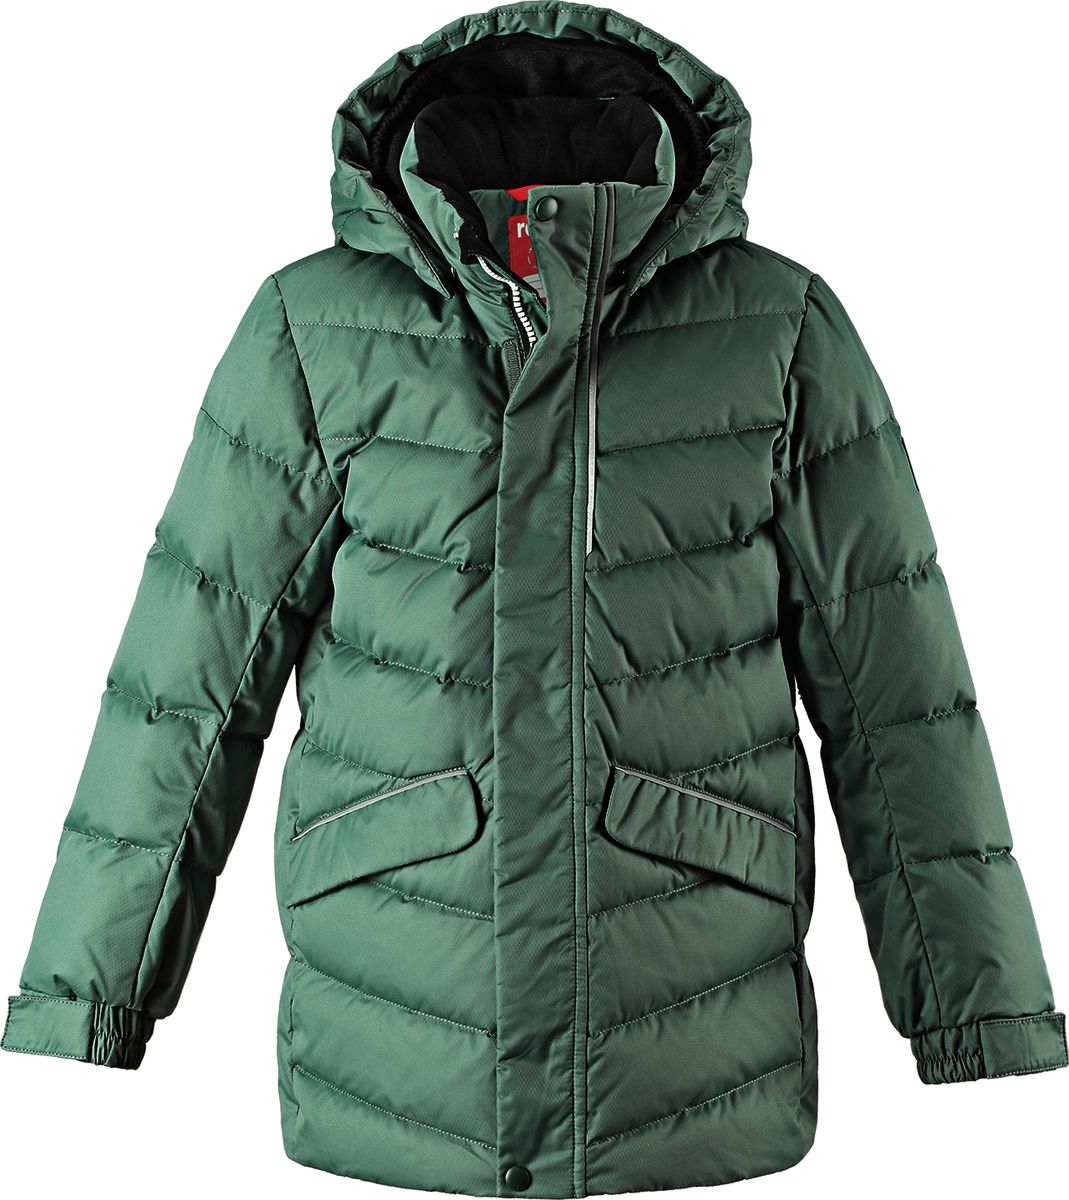 Куртка для мальчика Reima Janne, цвет: зеленый. 5313718630. Размер 134